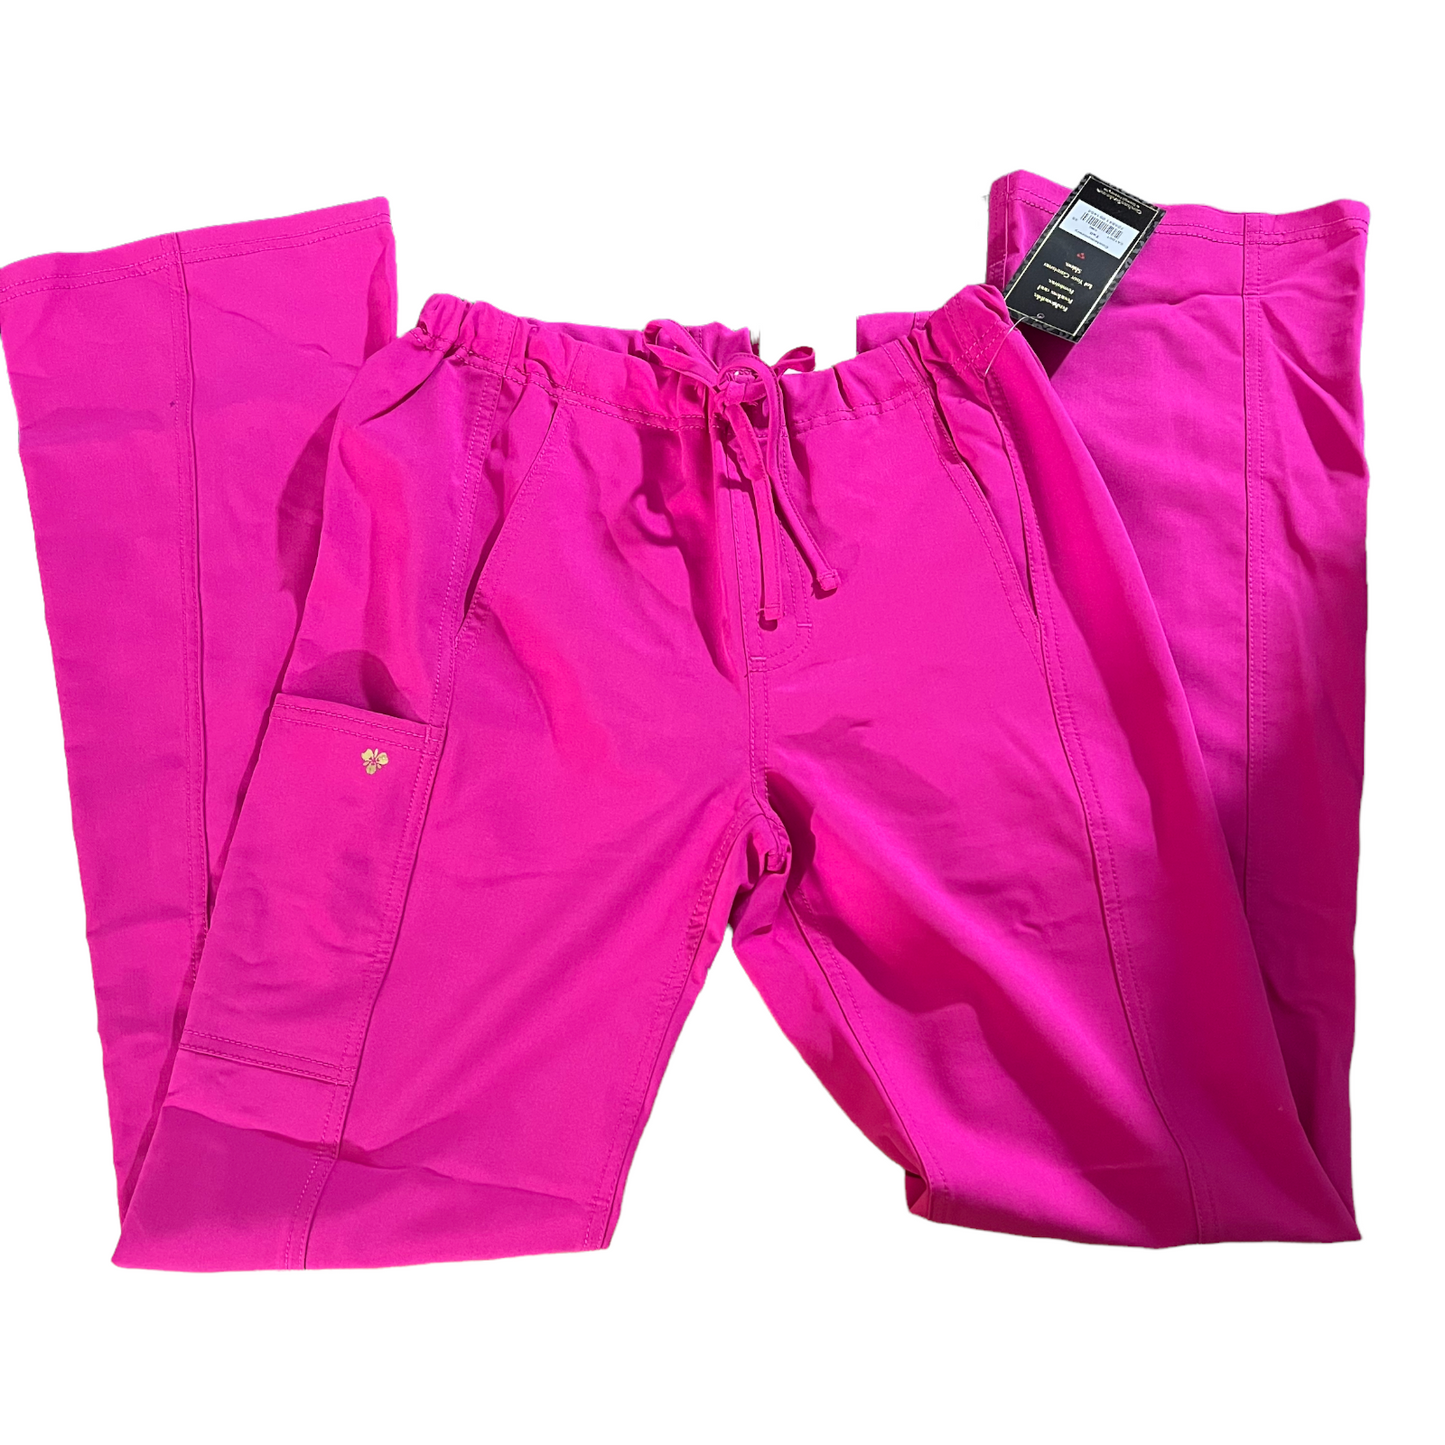 New Hot Pink Careisma Scrubs Drawstring Closure Size XS (Tall)